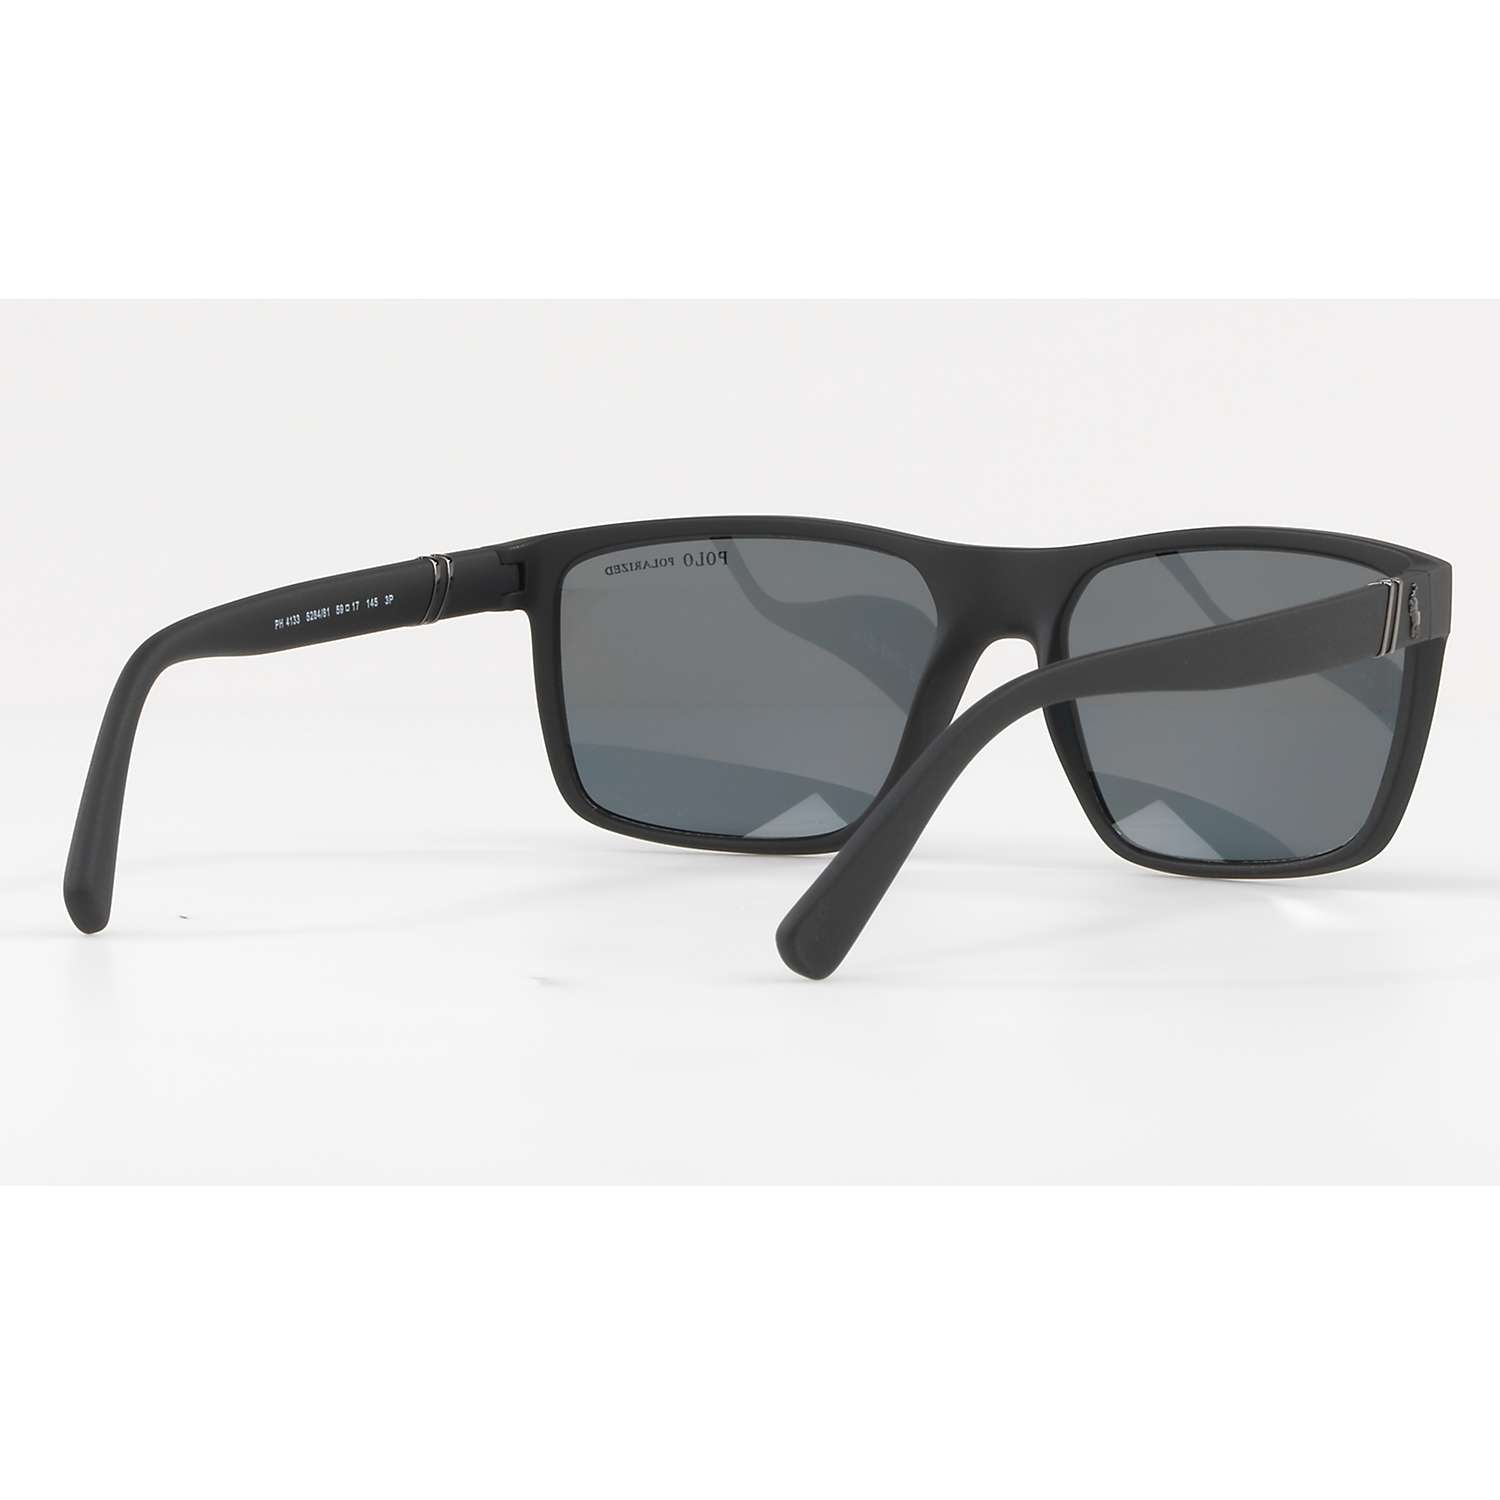 Buy Polo Ralph Lauren PH4133 Men's Polarised Rectangular Sunglasses Online at johnlewis.com